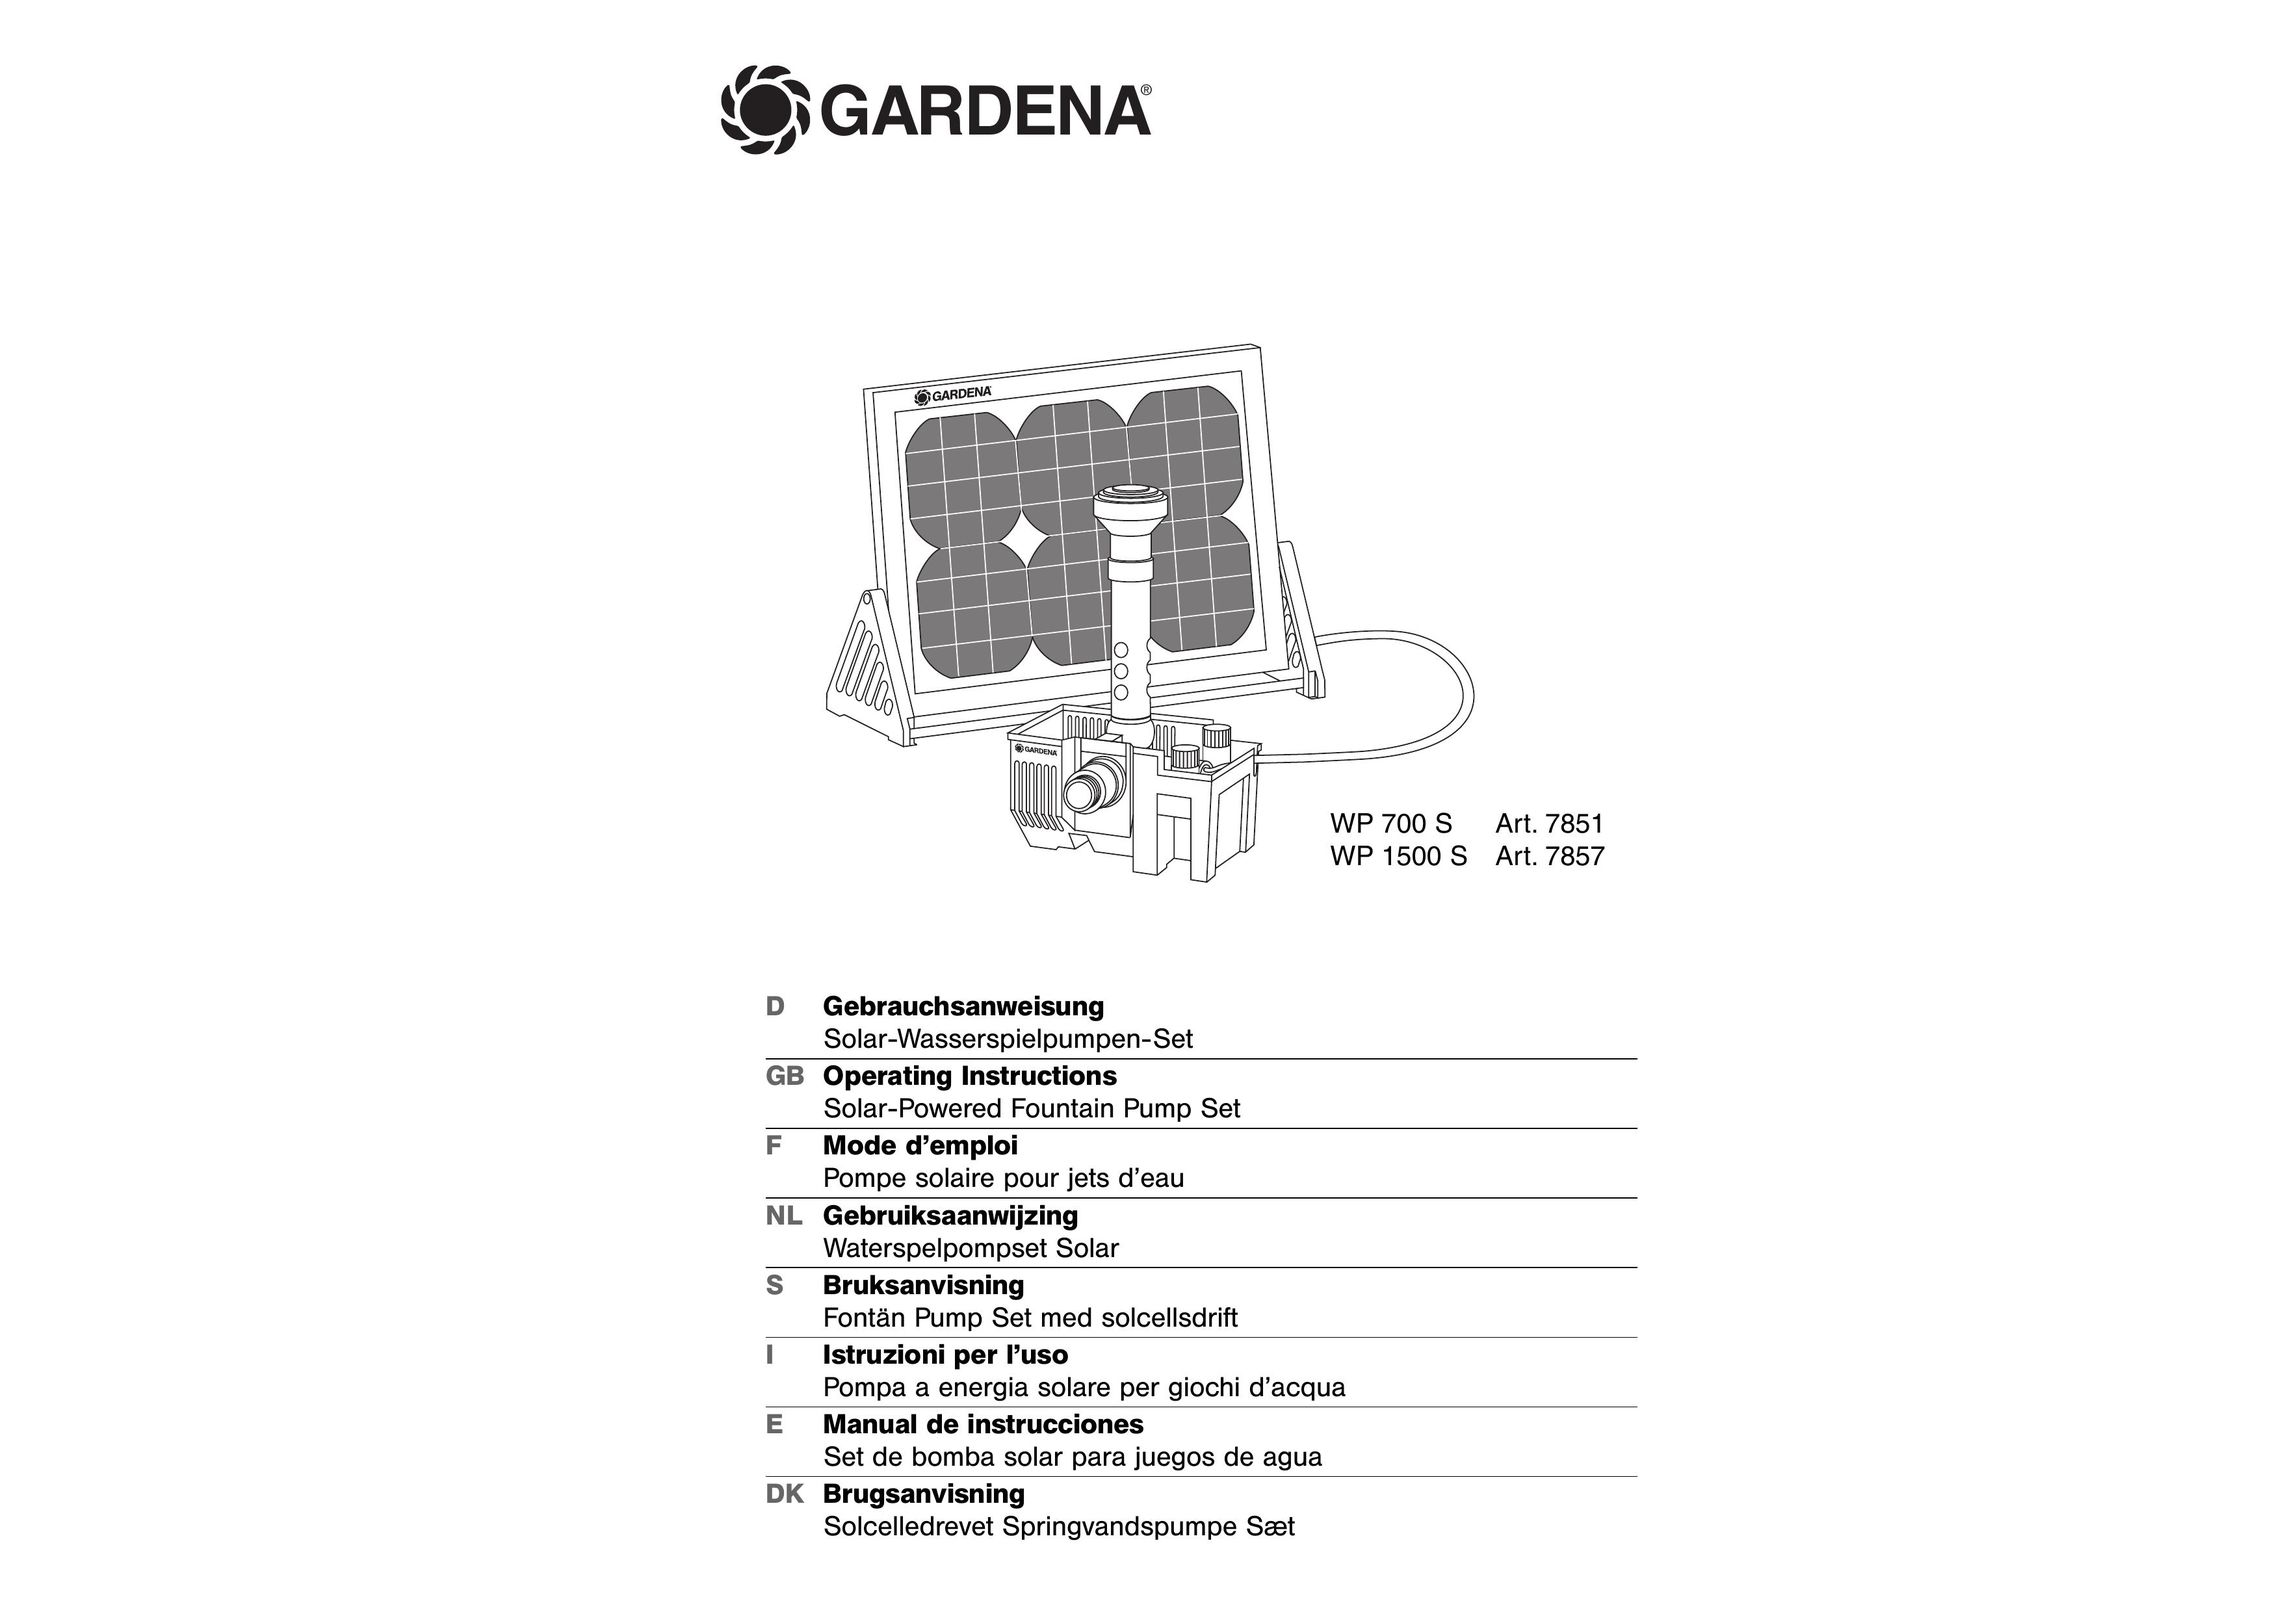 Gardena WP 700 S Heat Pump User Manual